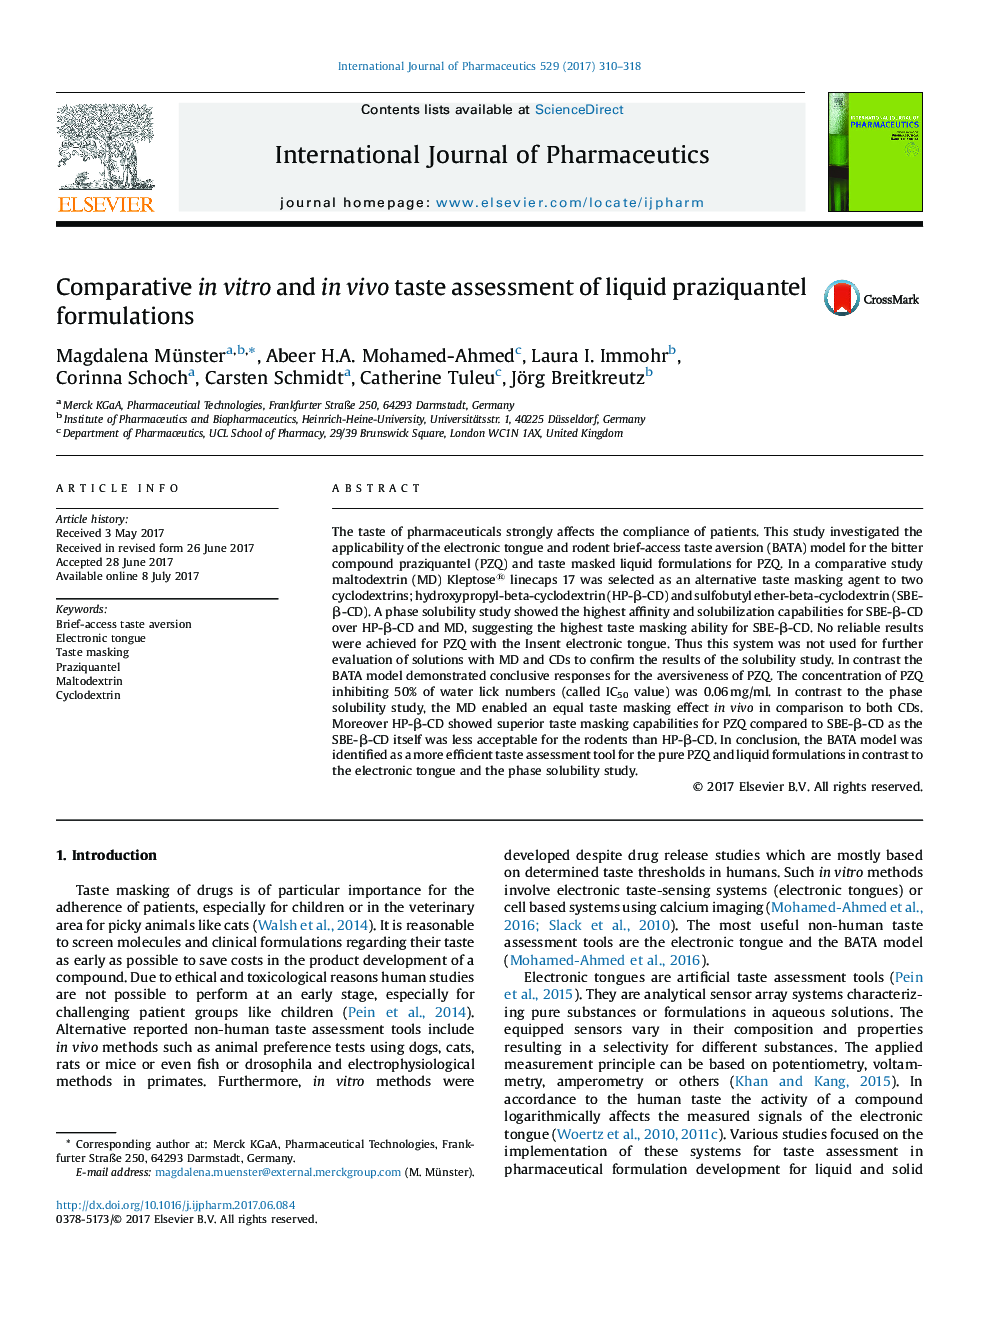 Comparative in vitro and in vivo taste assessment of liquid praziquantel formulations